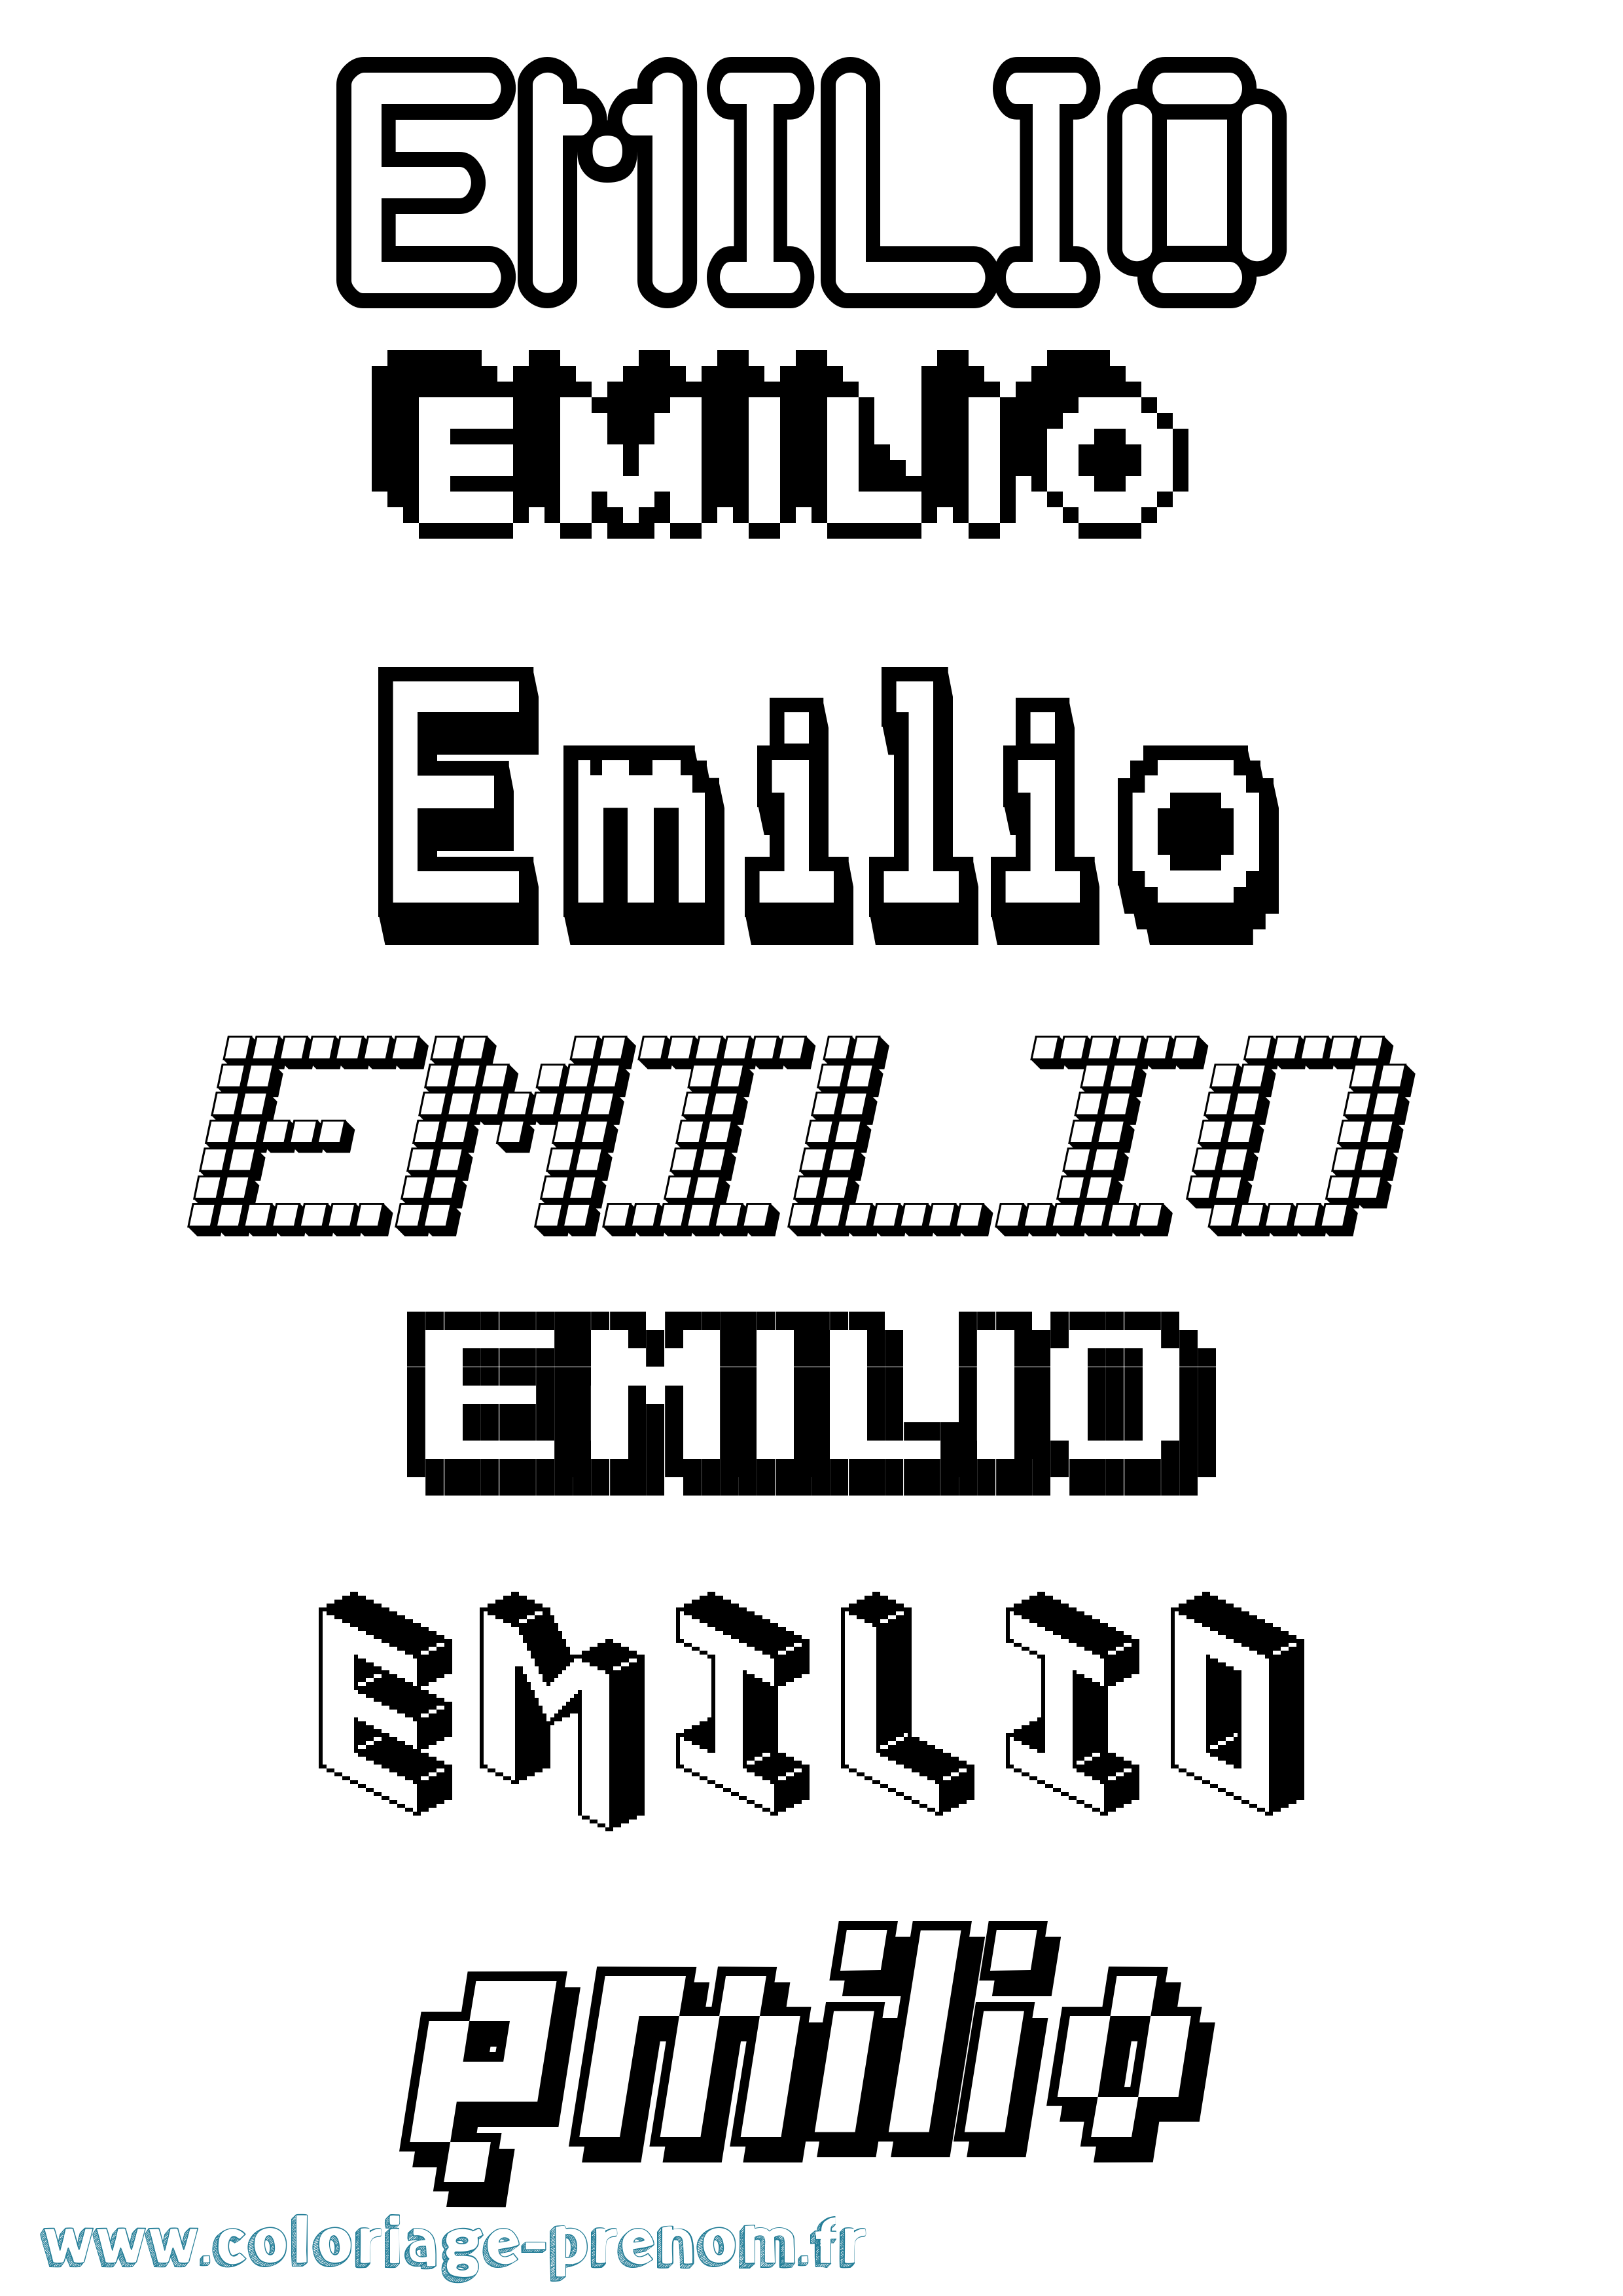 Coloriage prénom Emilio Pixel